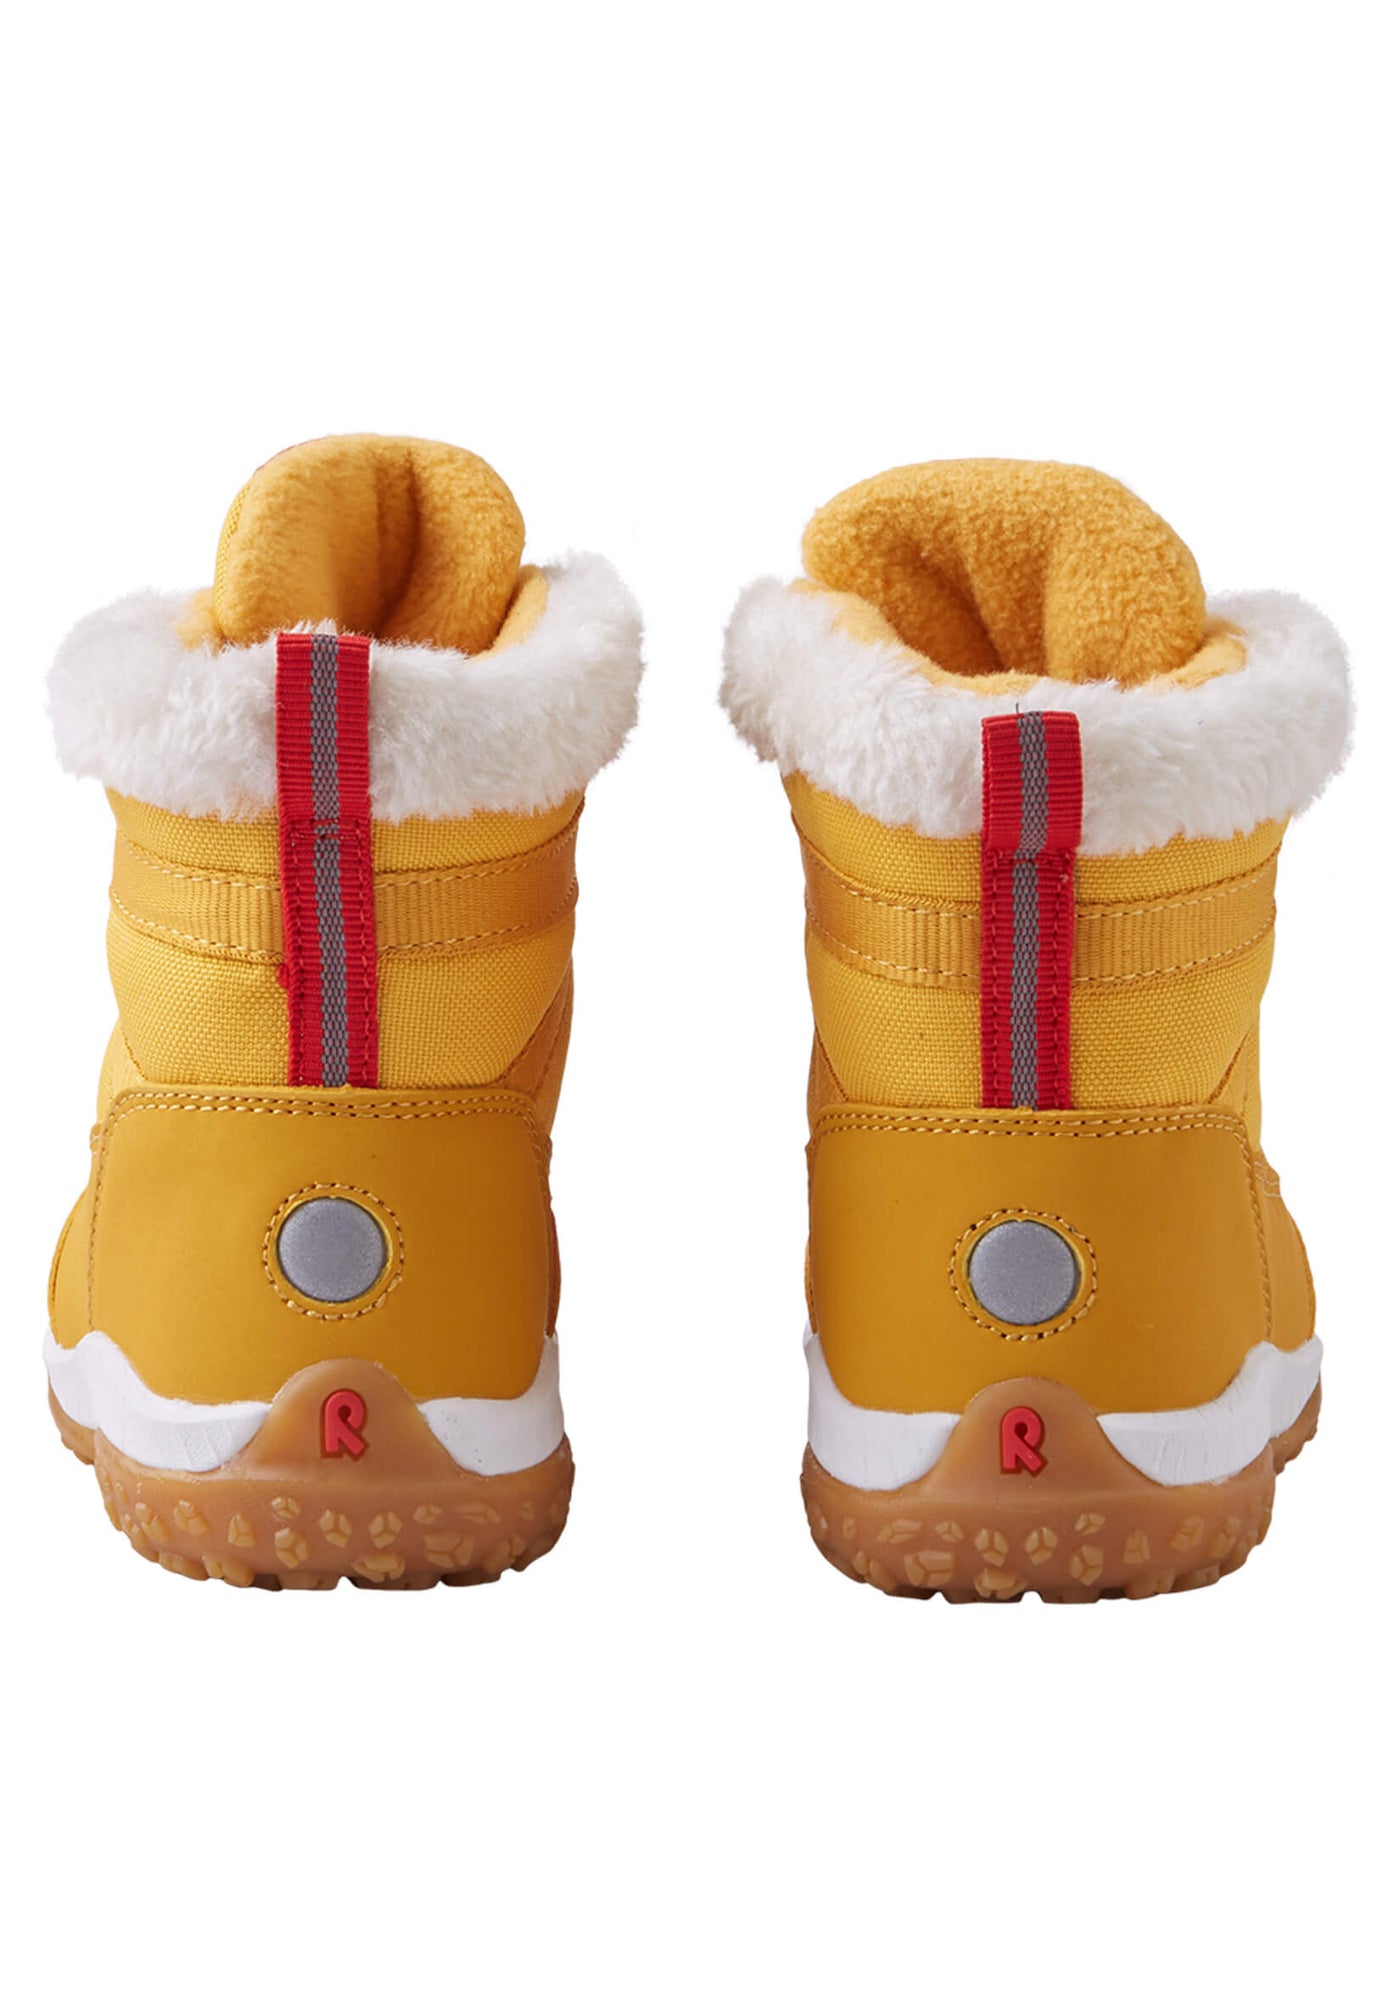 Reima Samooja Waterproof Kids Snow Boots